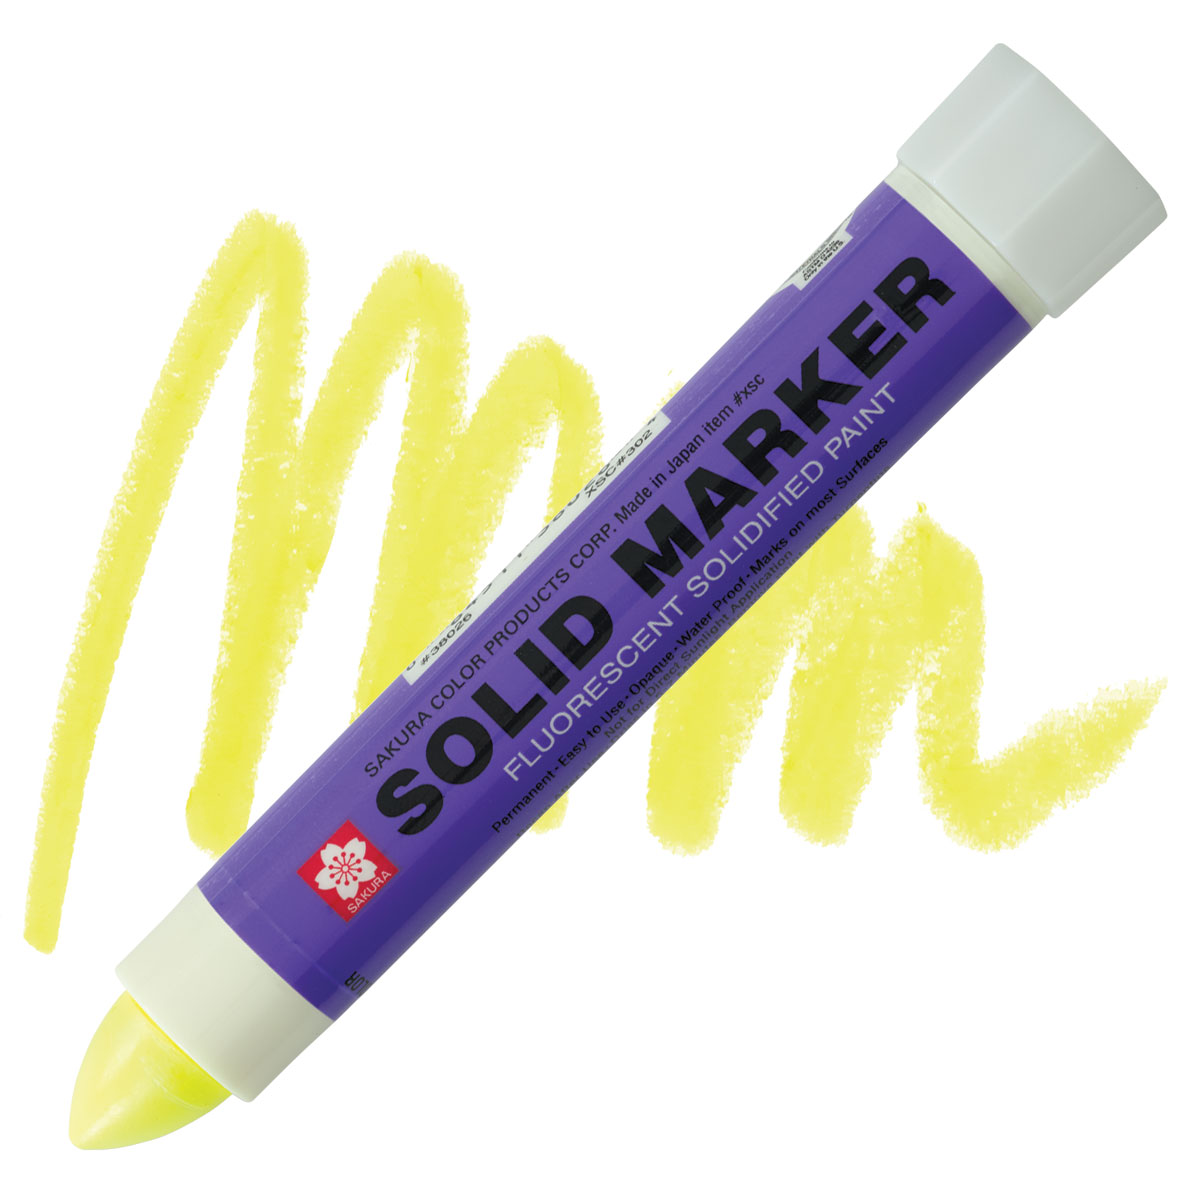 Маркер восковой. Маркер восковой строительный. Восковые фломастеры. Маркер восковый желтый. Solid Fluorescent Pen.